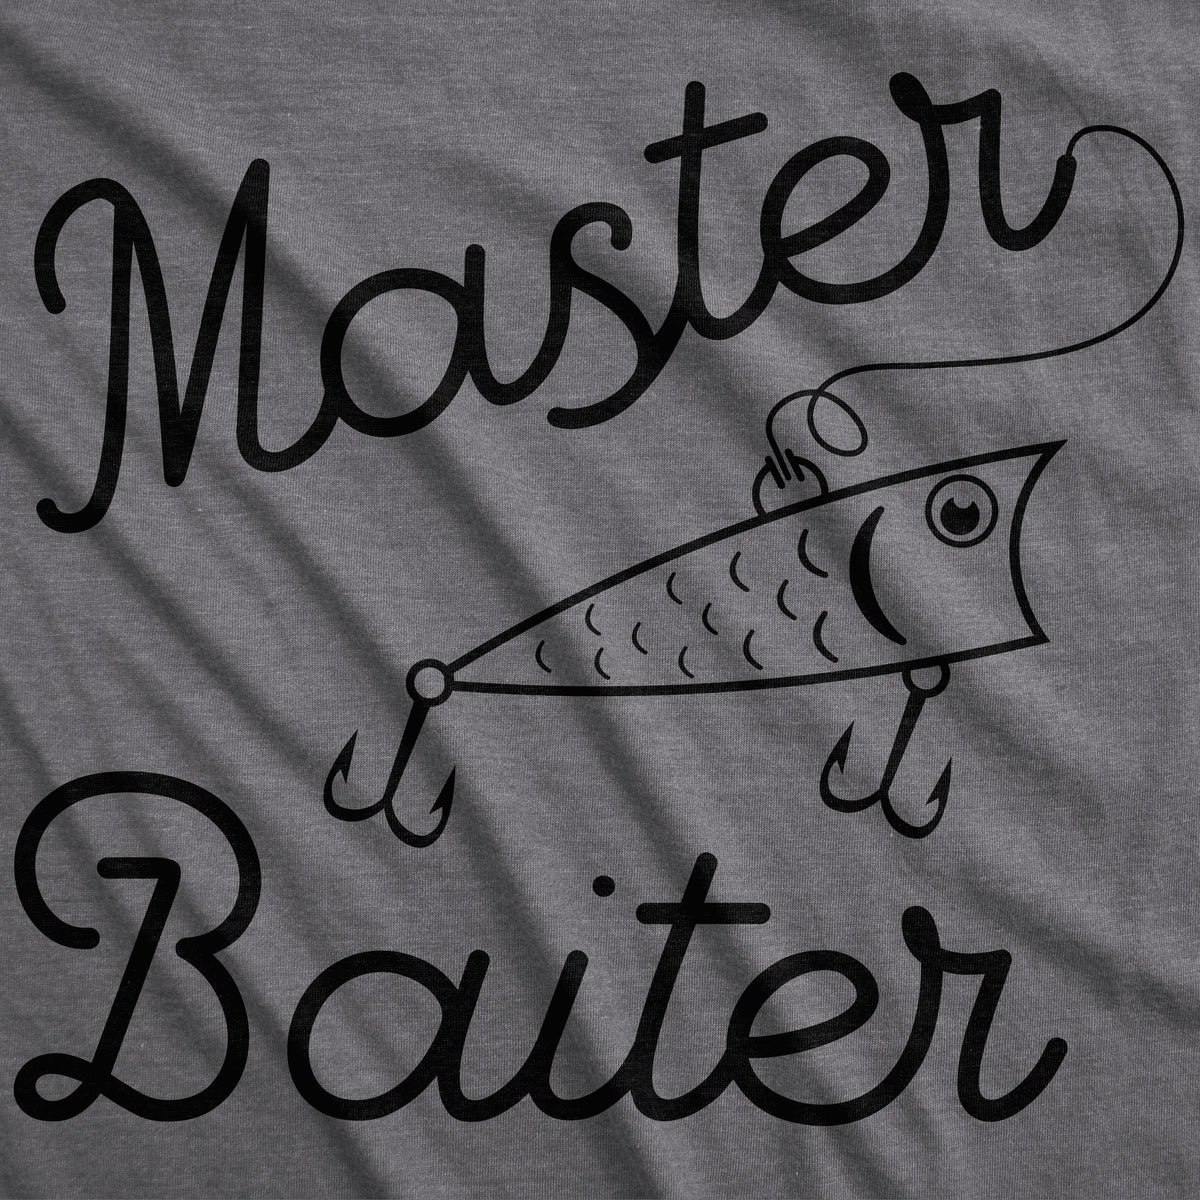 Master Baiter Men&#39;s Tshirt  -  Crazy Dog T-Shirts